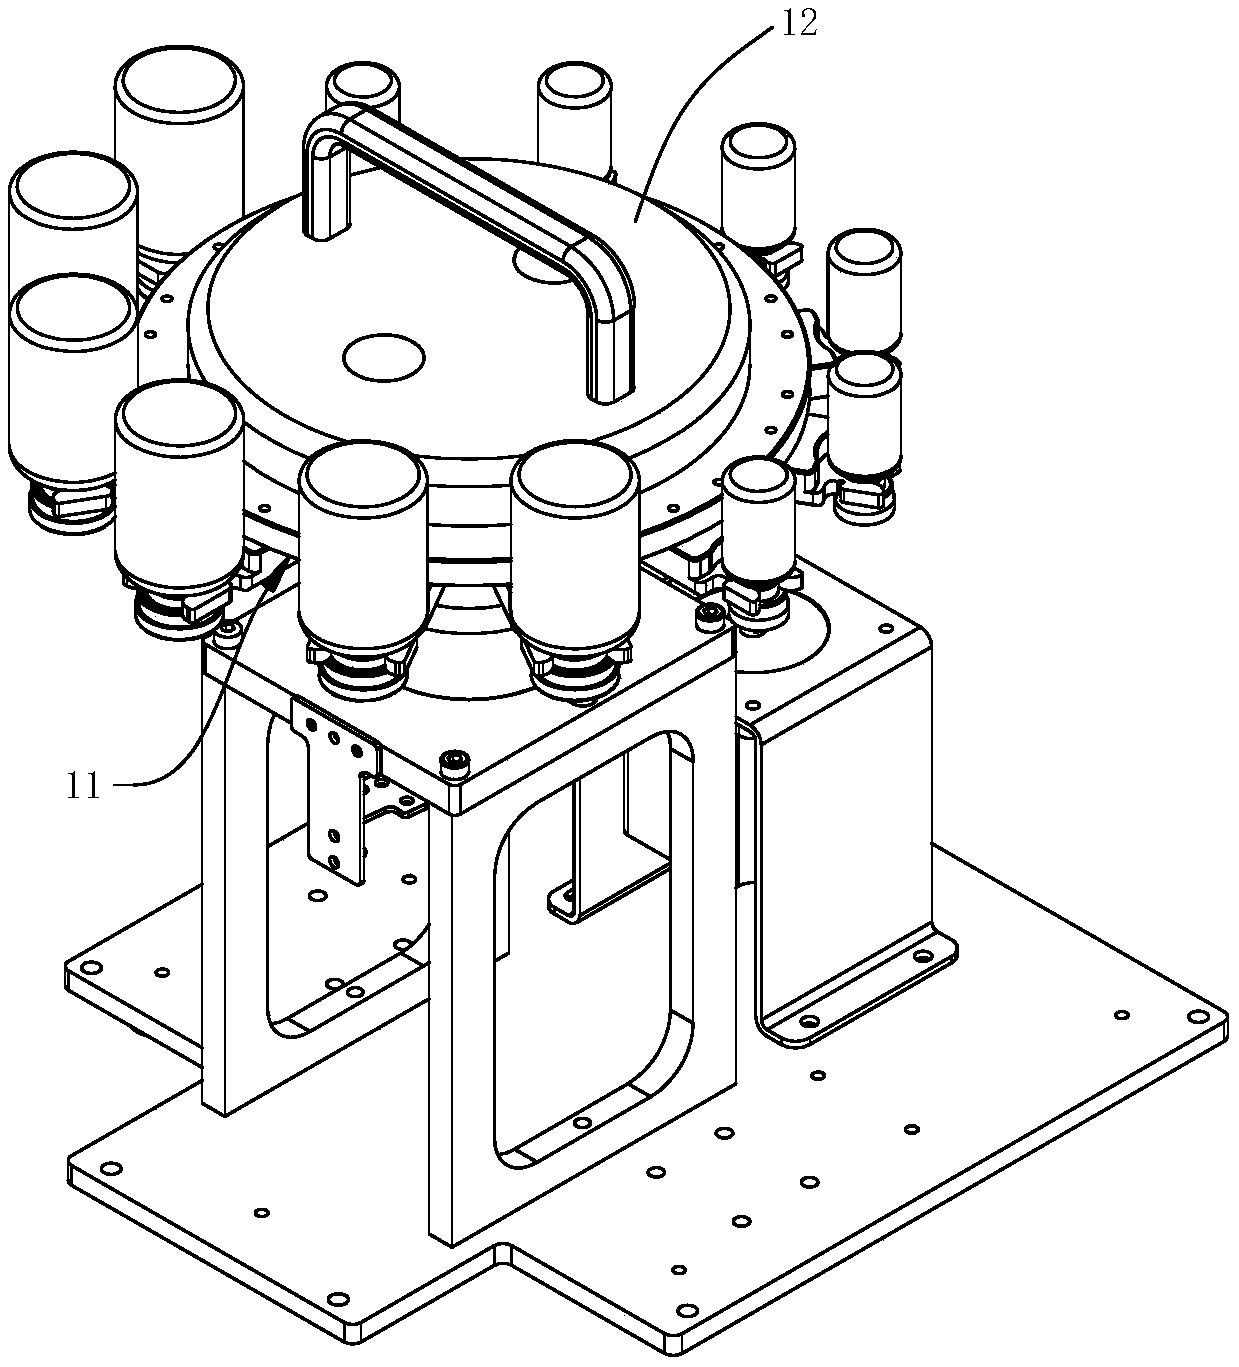 Automatic medicine dispensing machine for penicillin bottles